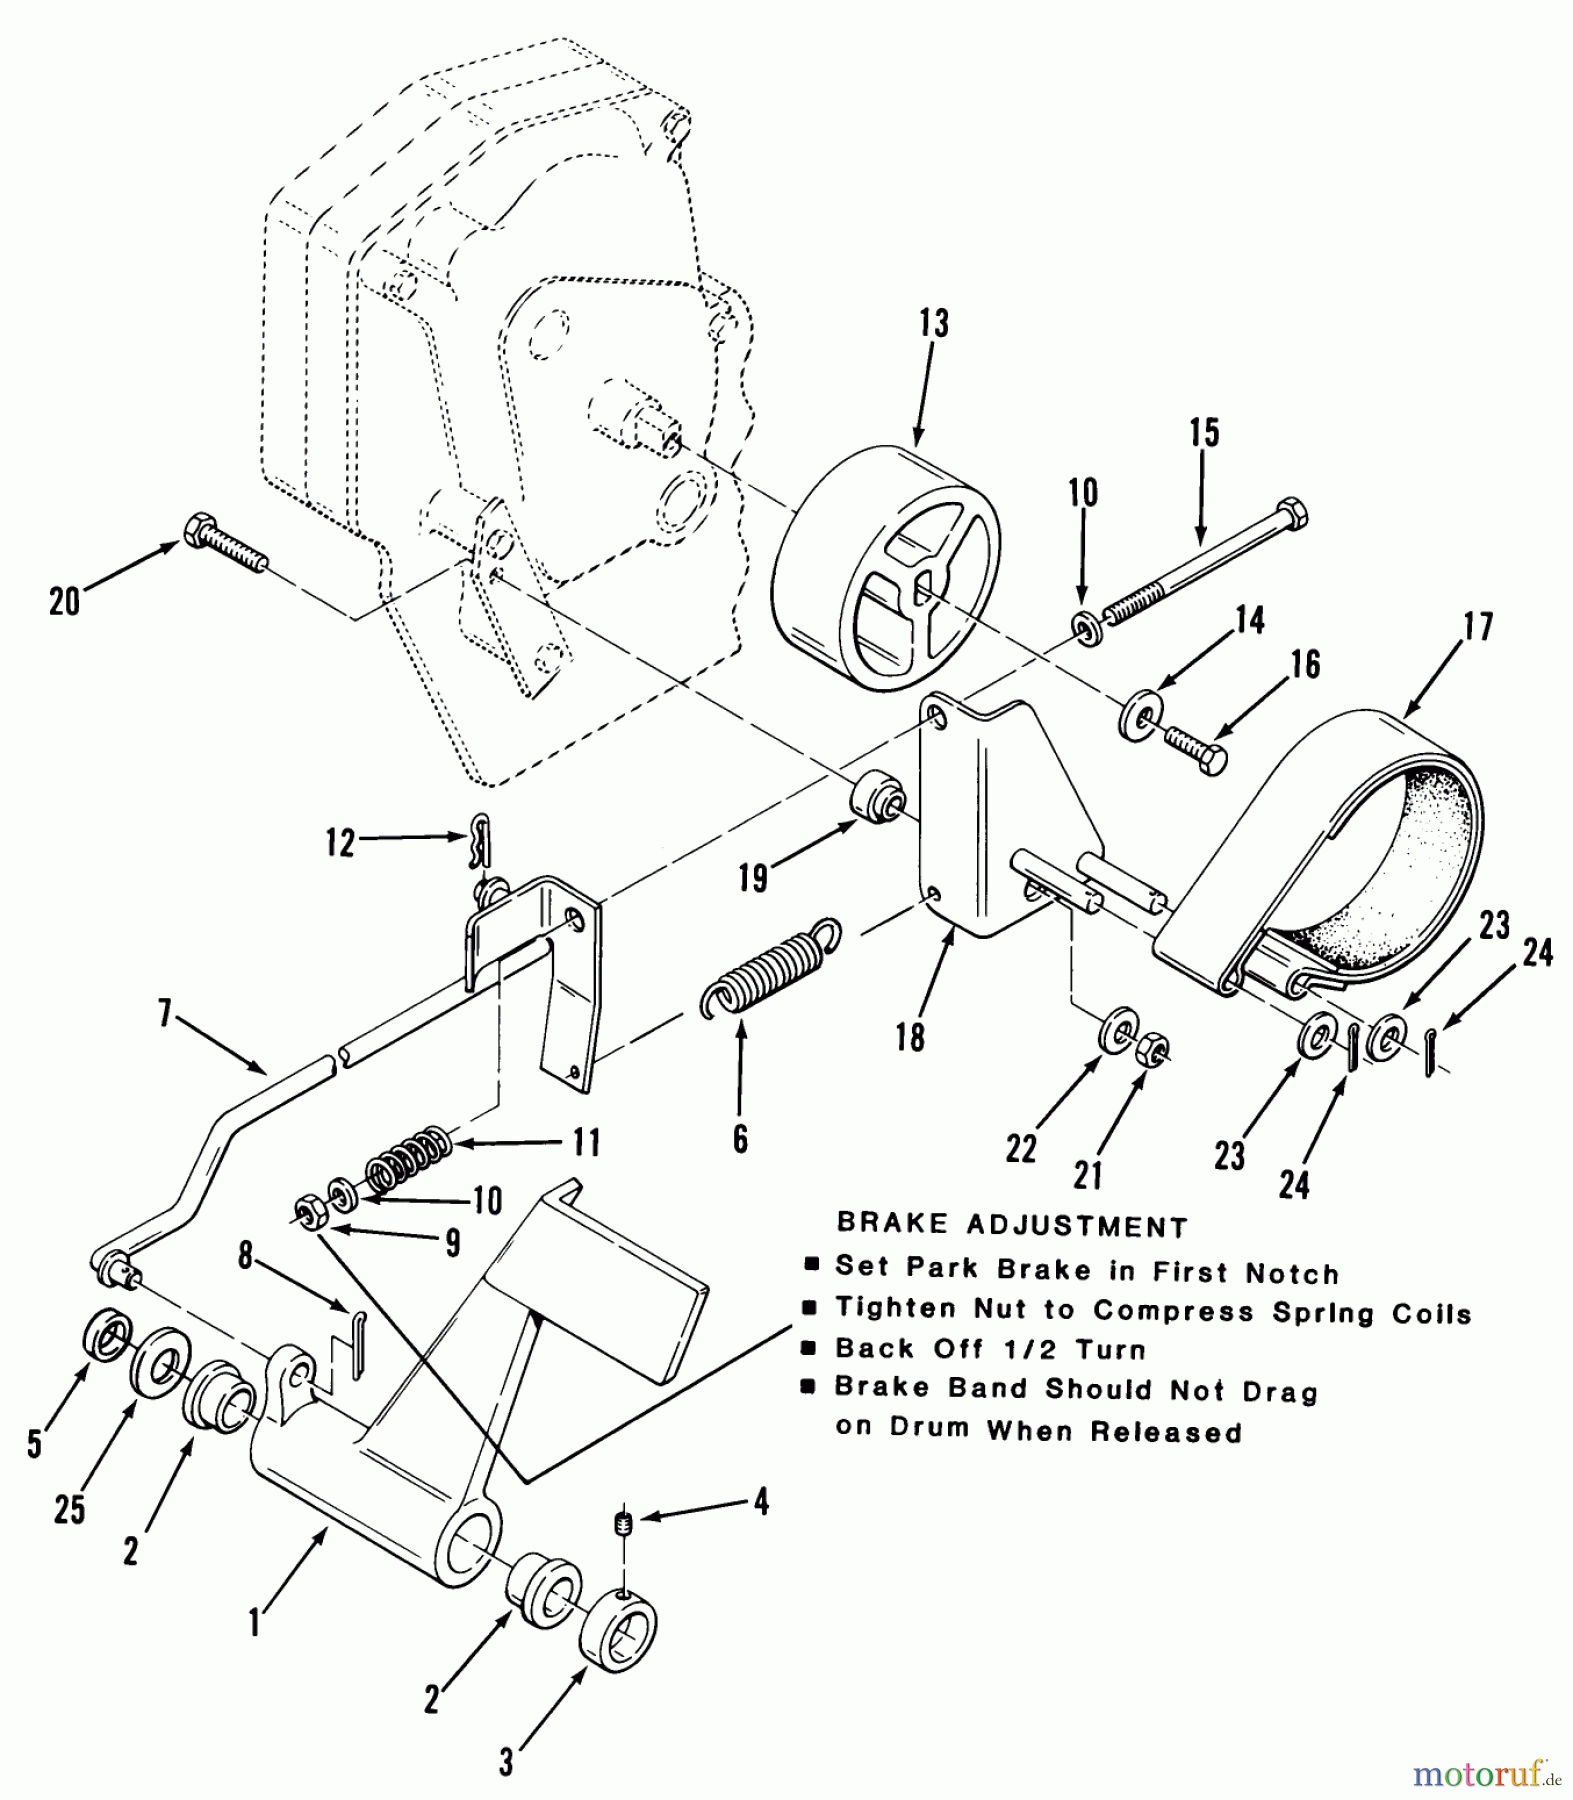  Toro Neu Mowers, Lawn & Garden Tractor Seite 1 01-17KE03 (C-175) - Toro C-175 Twin Automatic Tractor, 1983 CLUTCH, BRAKE AND SPEED CONTROL LINKAGE #3